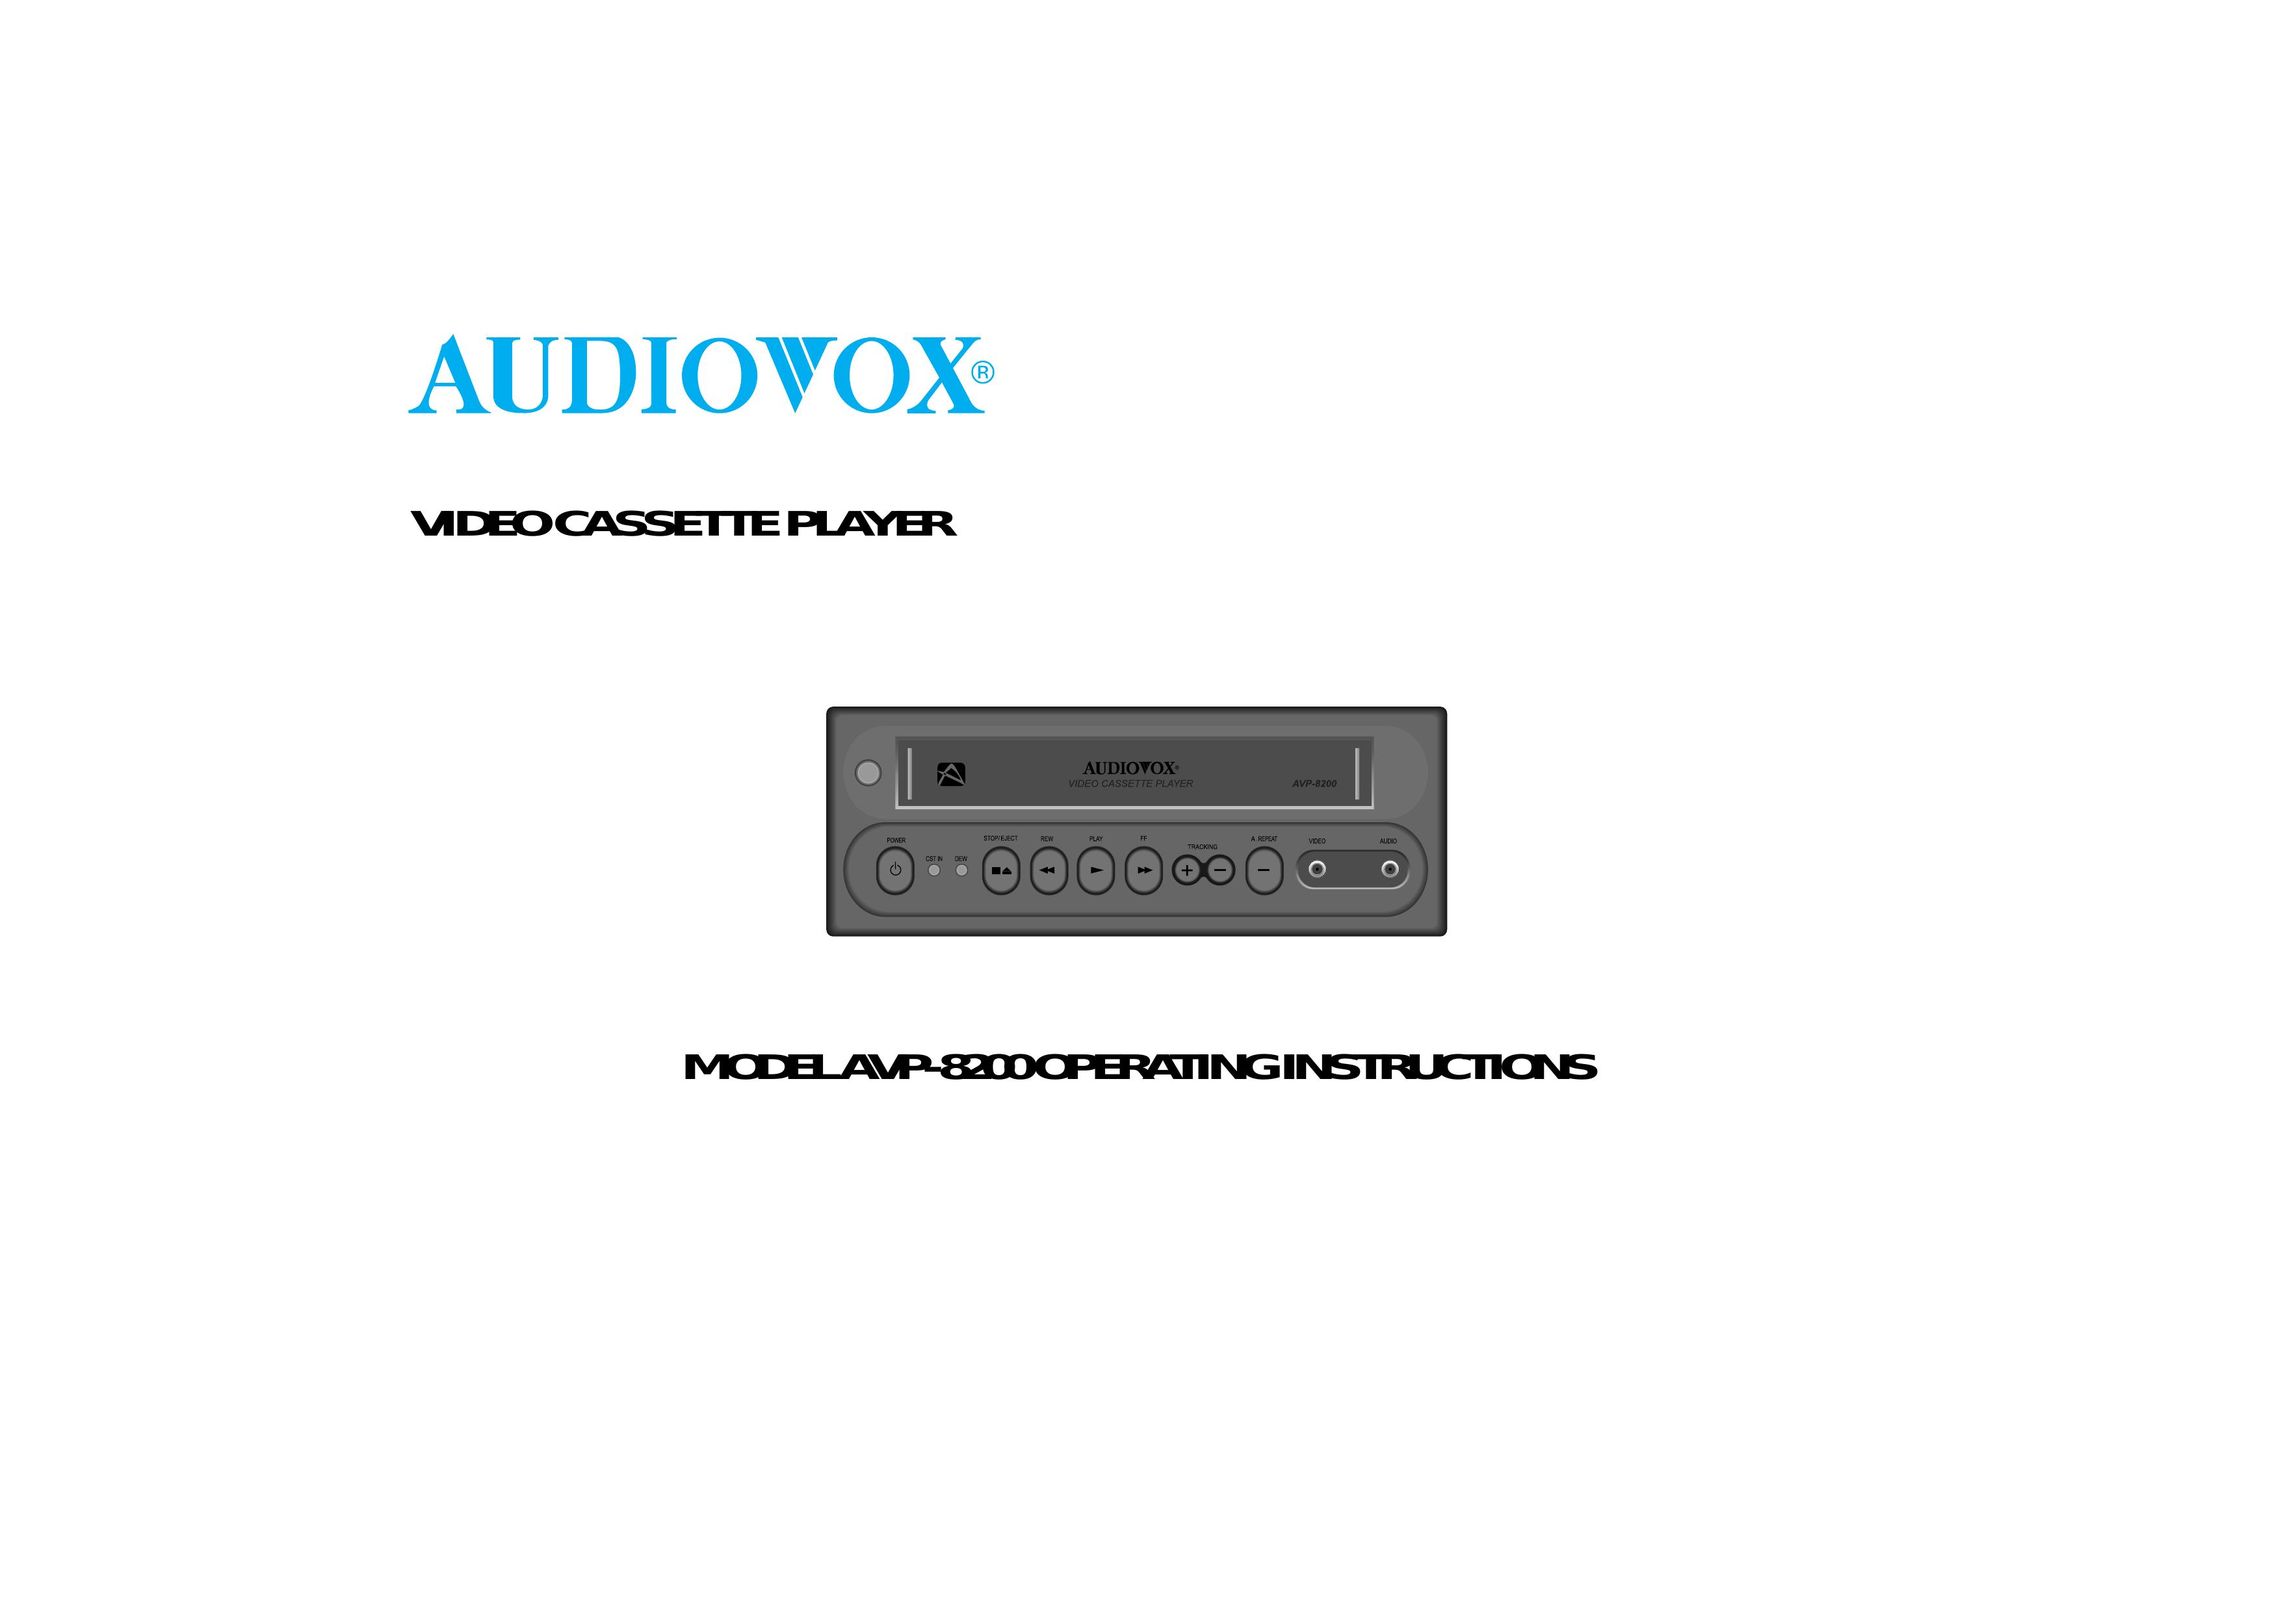 Audiovox AVP-8200 VCR User Manual